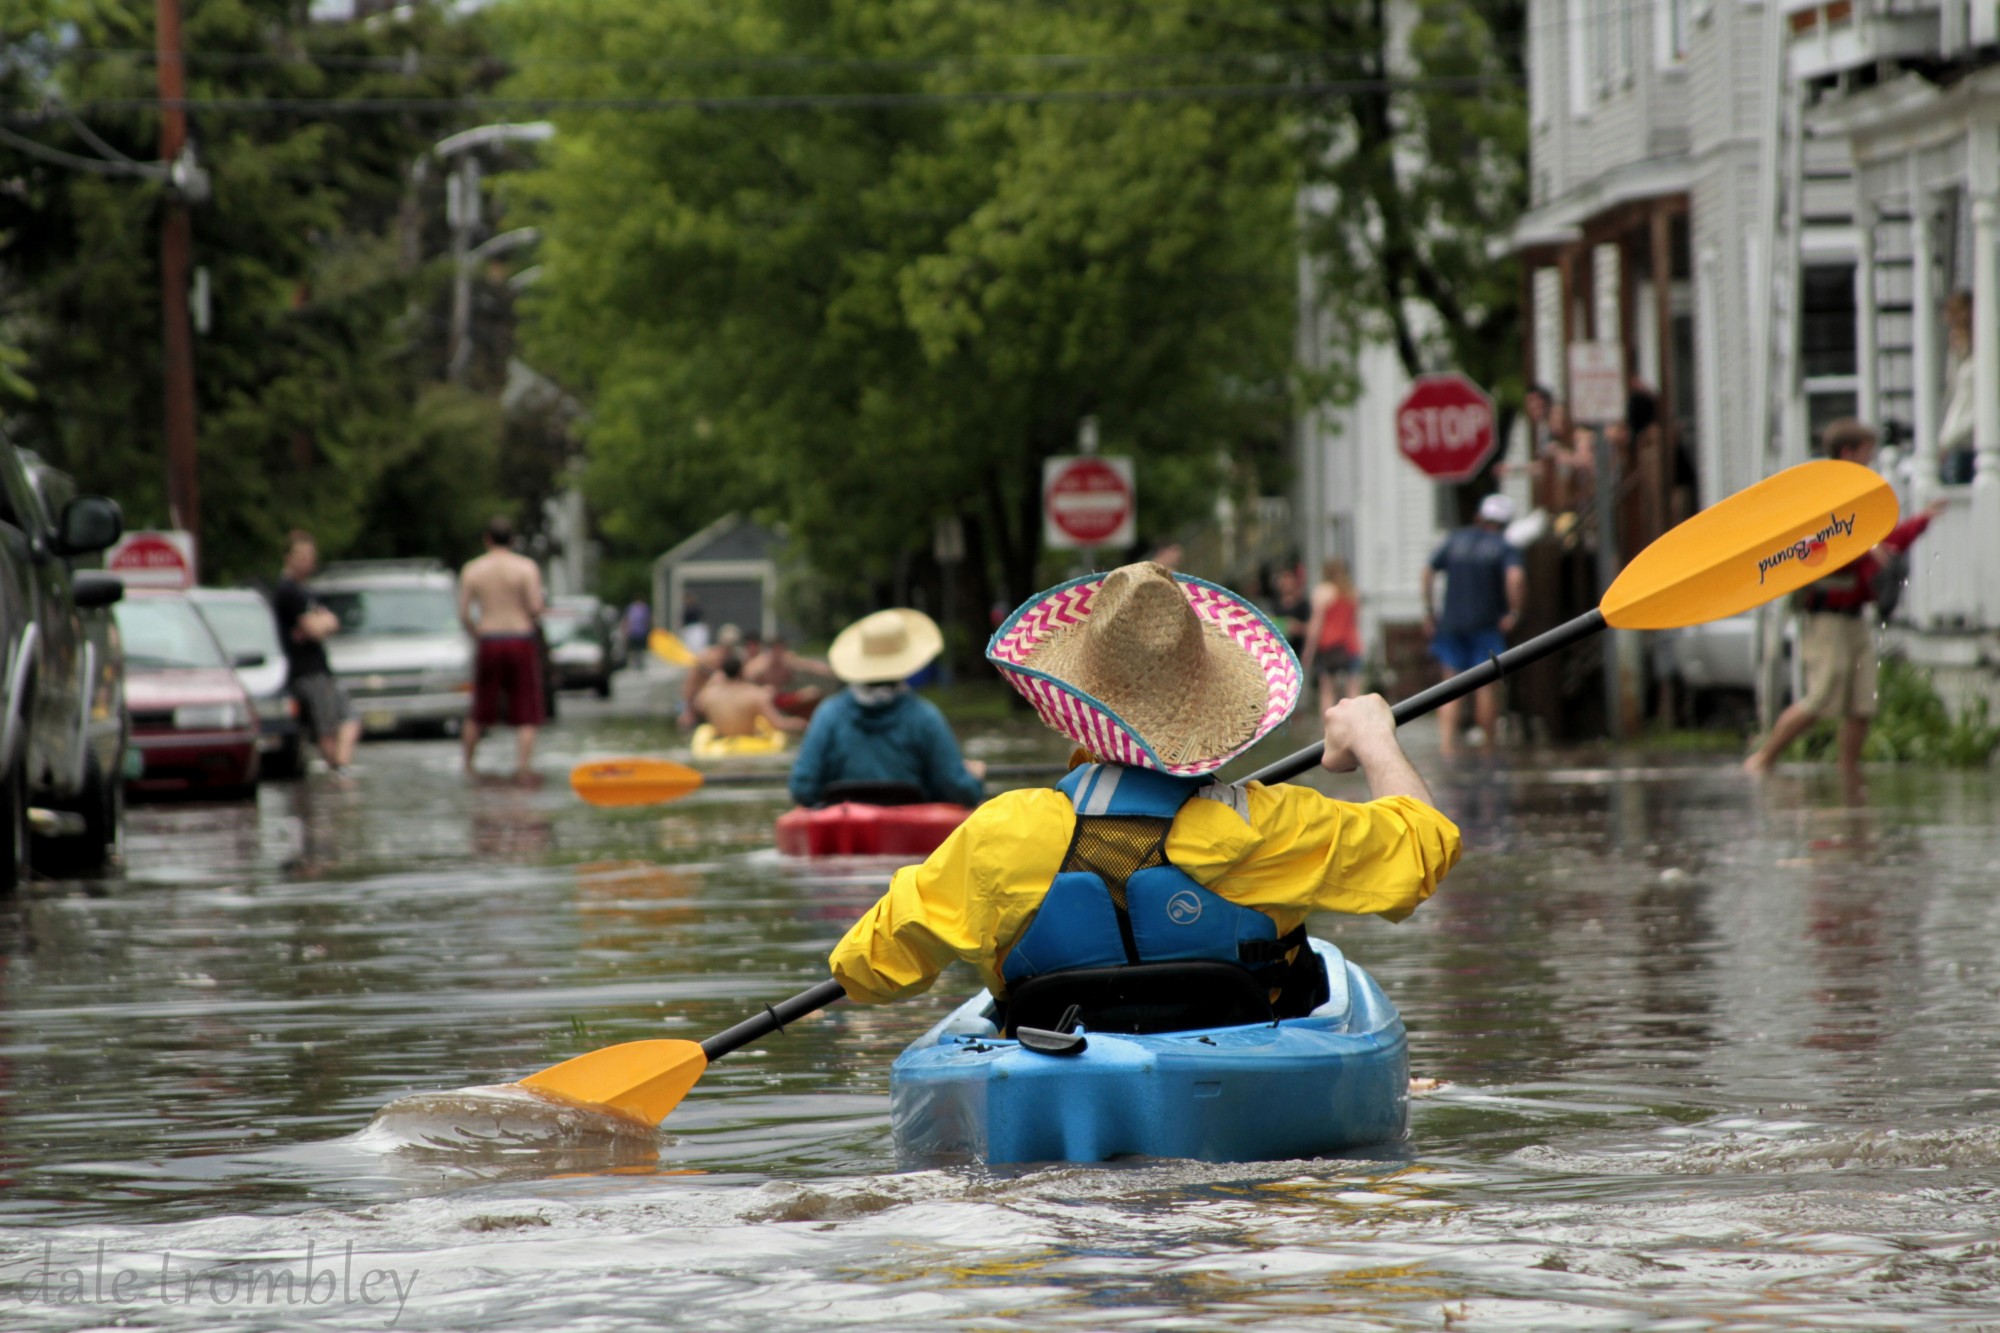 Kayaker-Greene-Street-Tuesday-after-heavy-rain-fall-05-22-13-4172